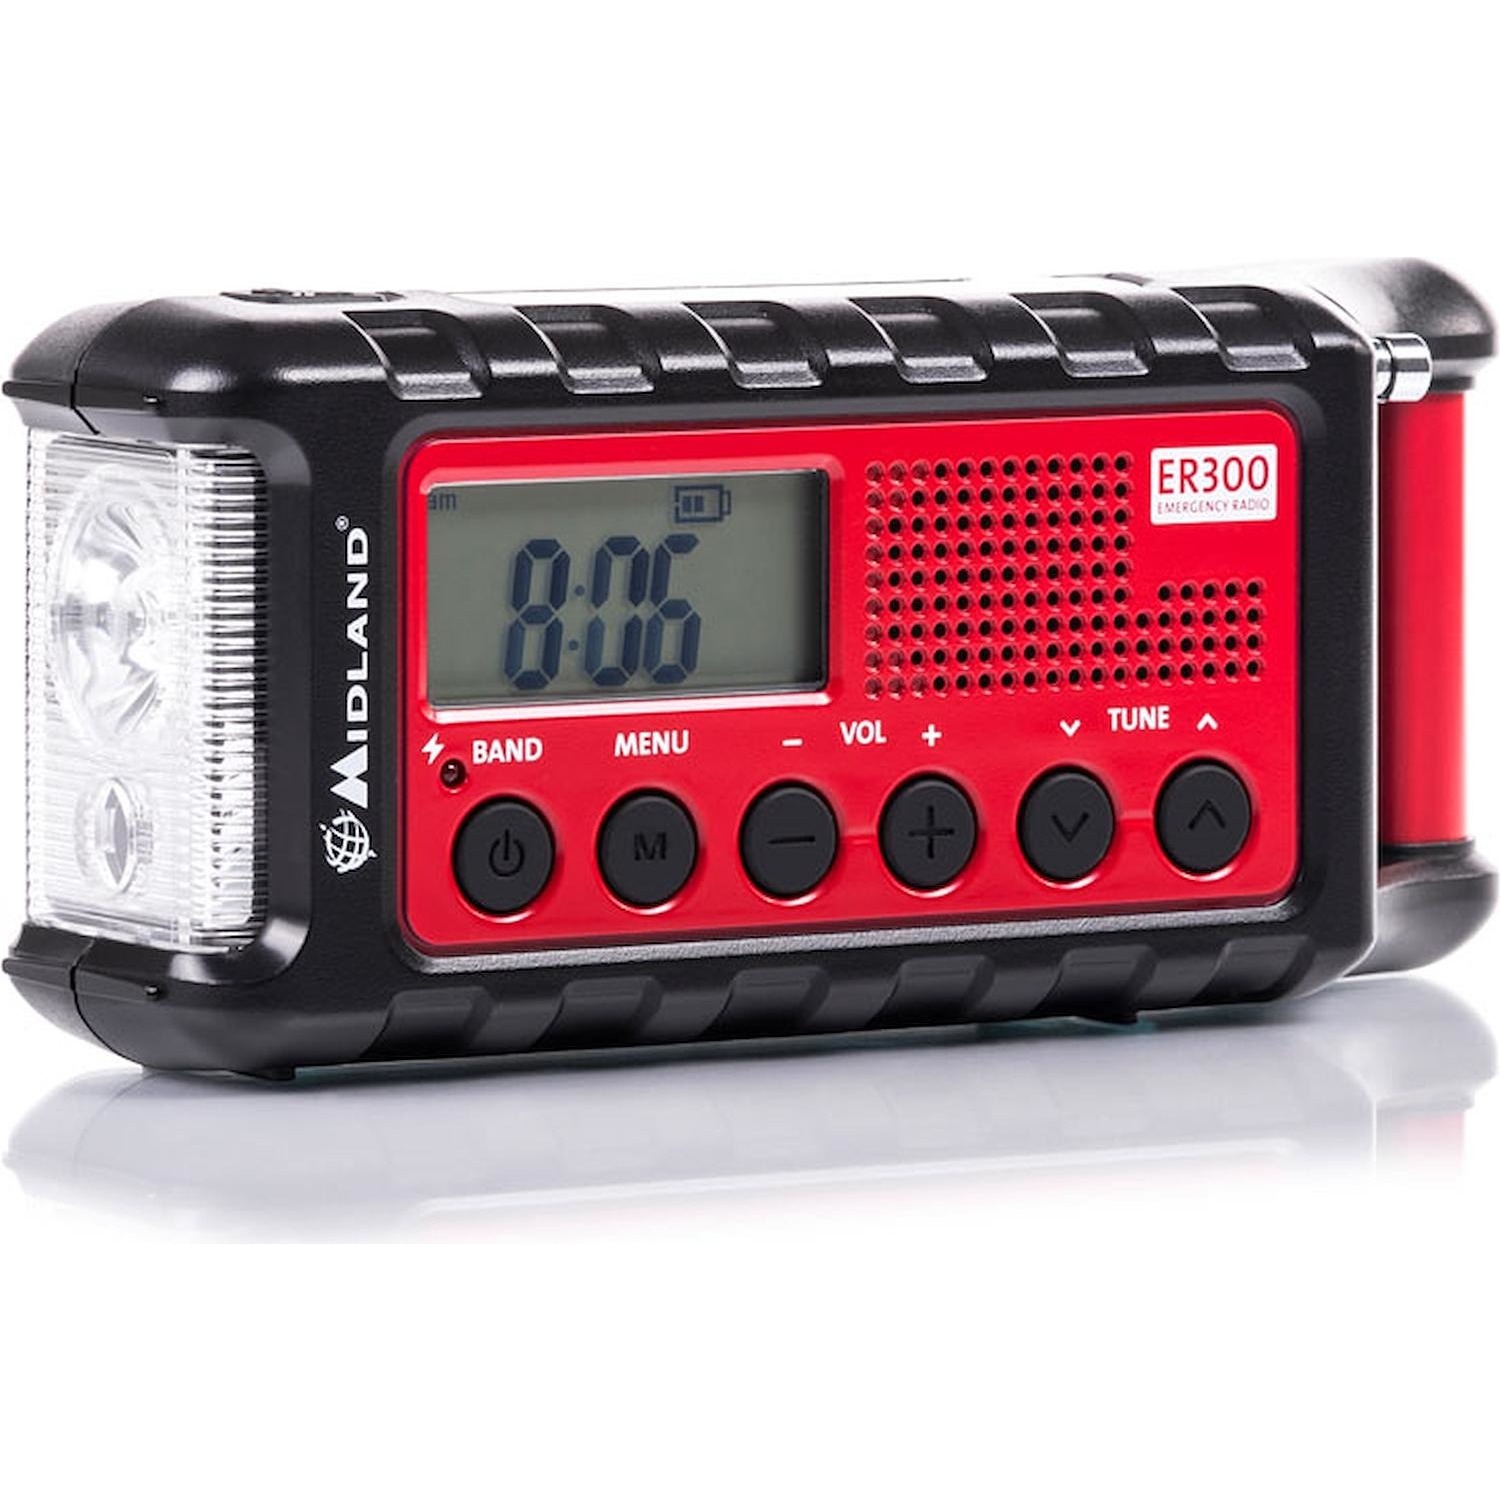 Immagine per Powerbank Midland C1173 ER300 radio di emergenza da DIMOStore